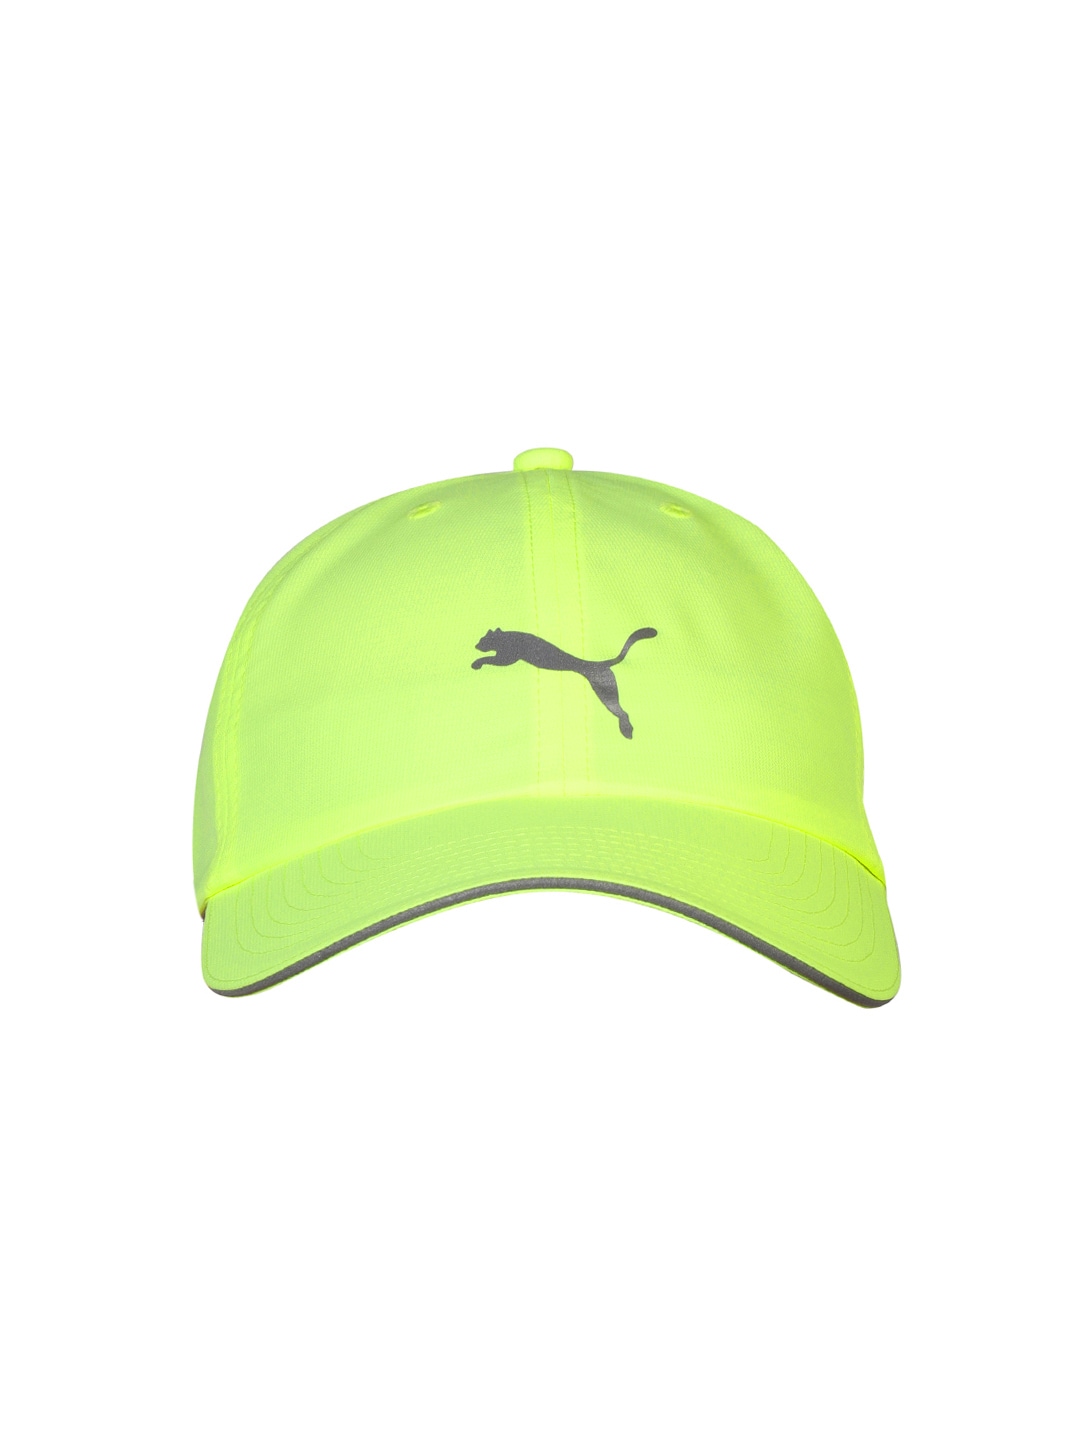 Puma Unisex Lime Green Running Baseball Cap Price in India